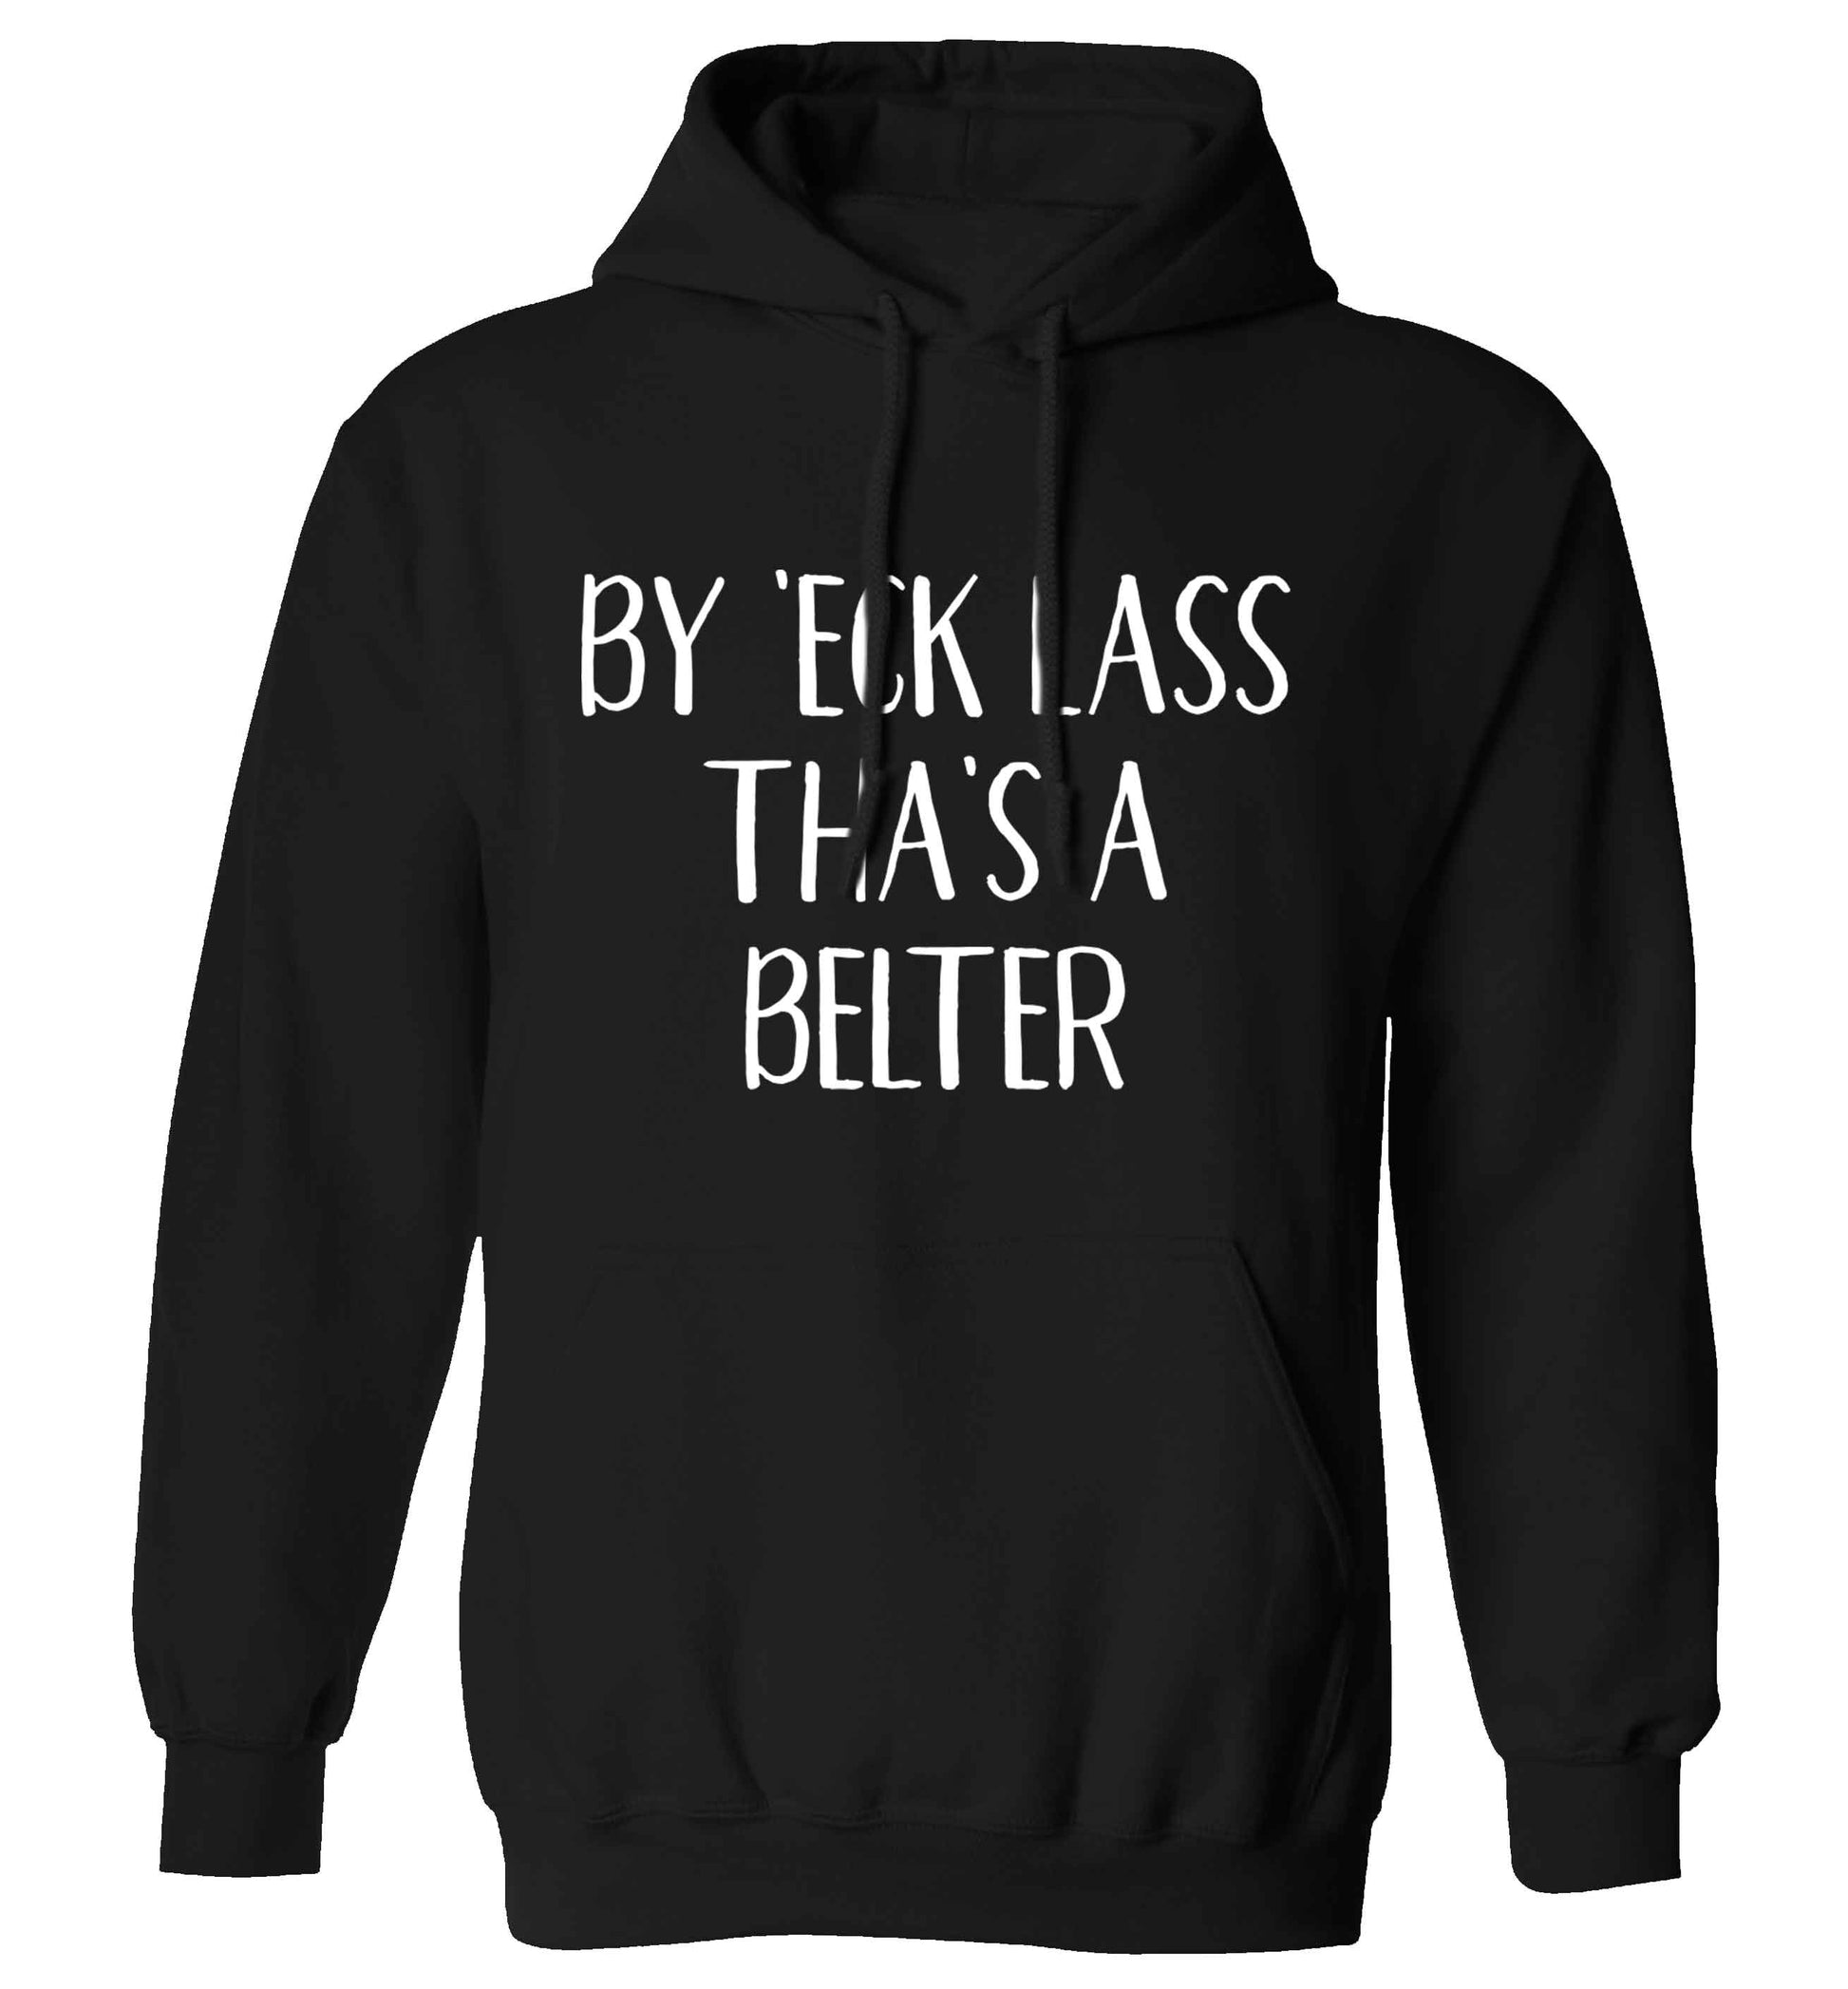 Be 'eck lass tha's a belter adults unisex black hoodie 2XL